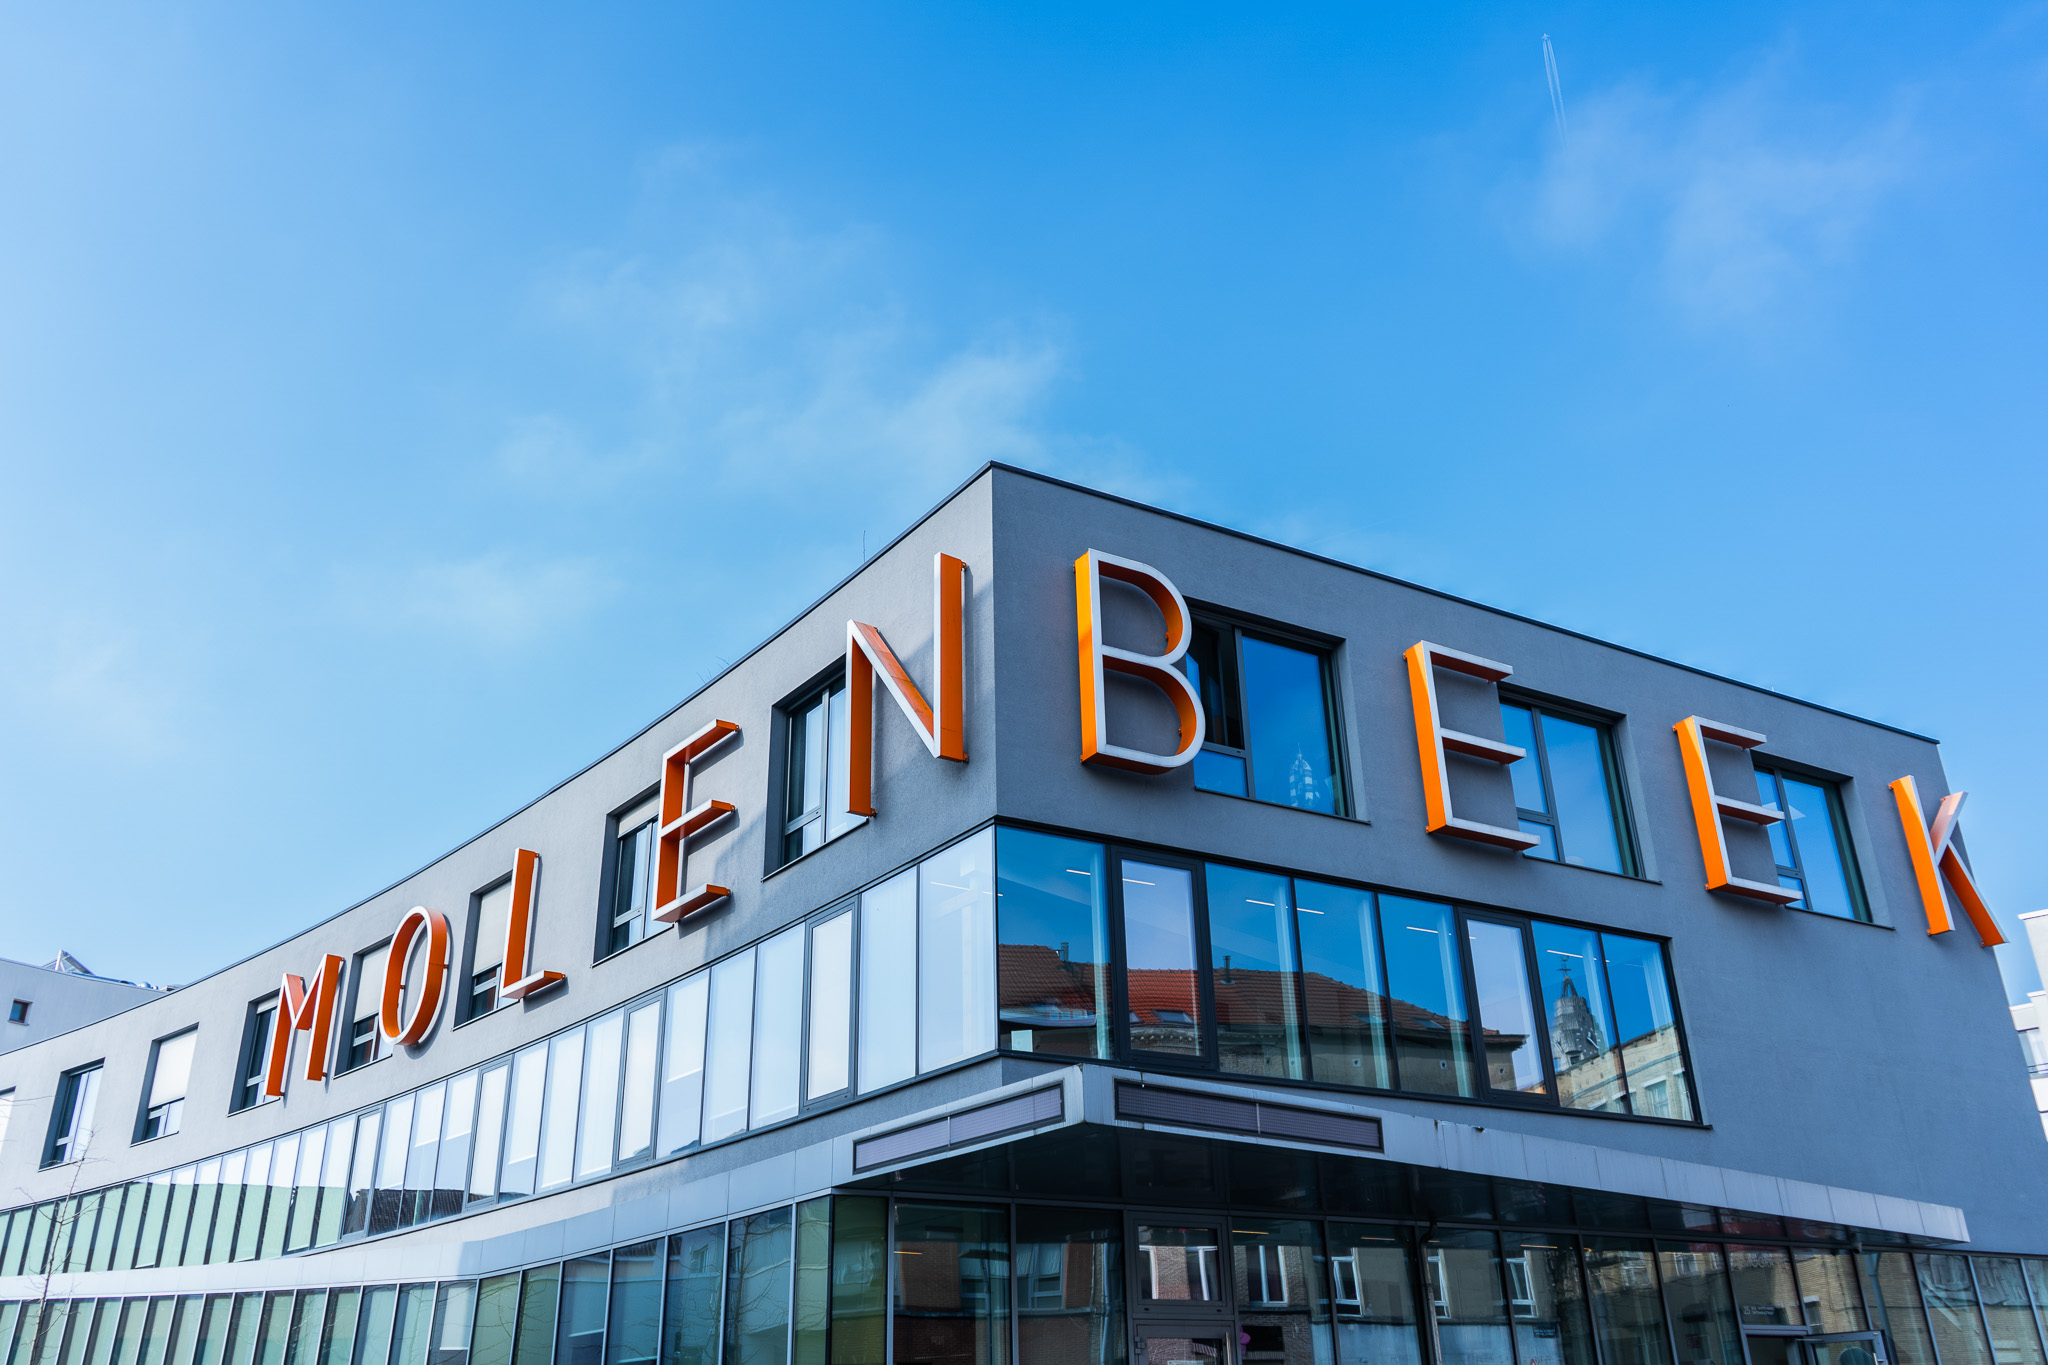 Brussels municipality Molenbeek aims for city status